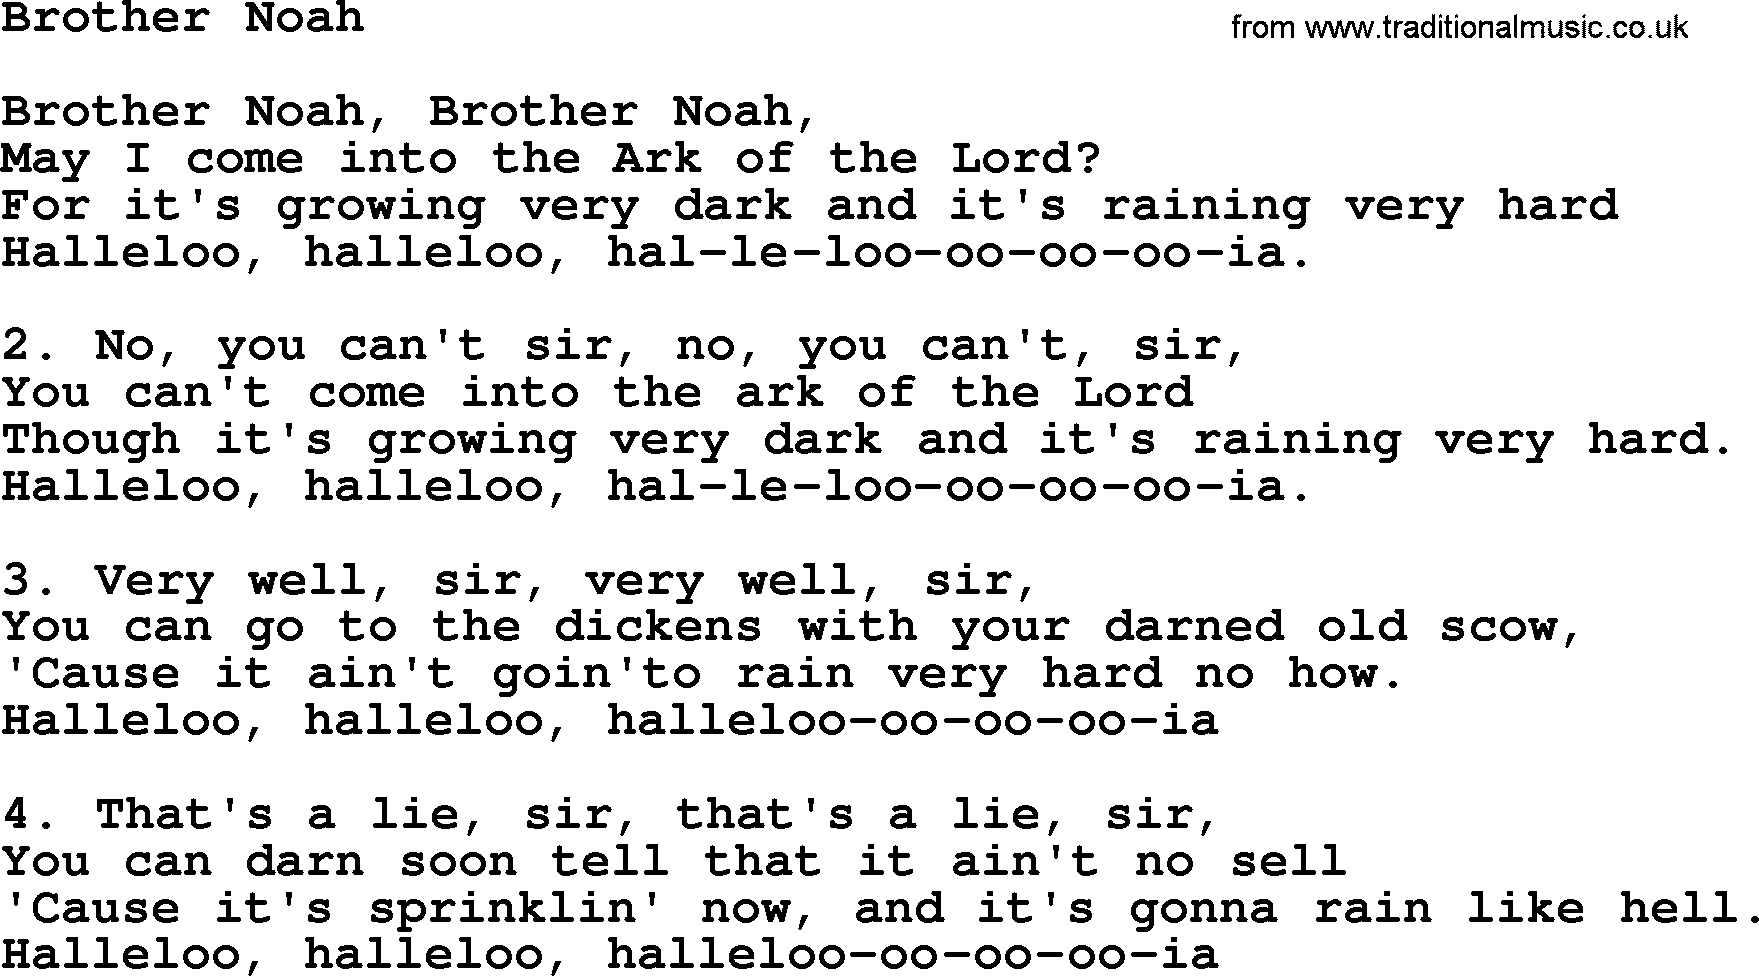 Sea Song or Shantie: Brother Noah, lyrics